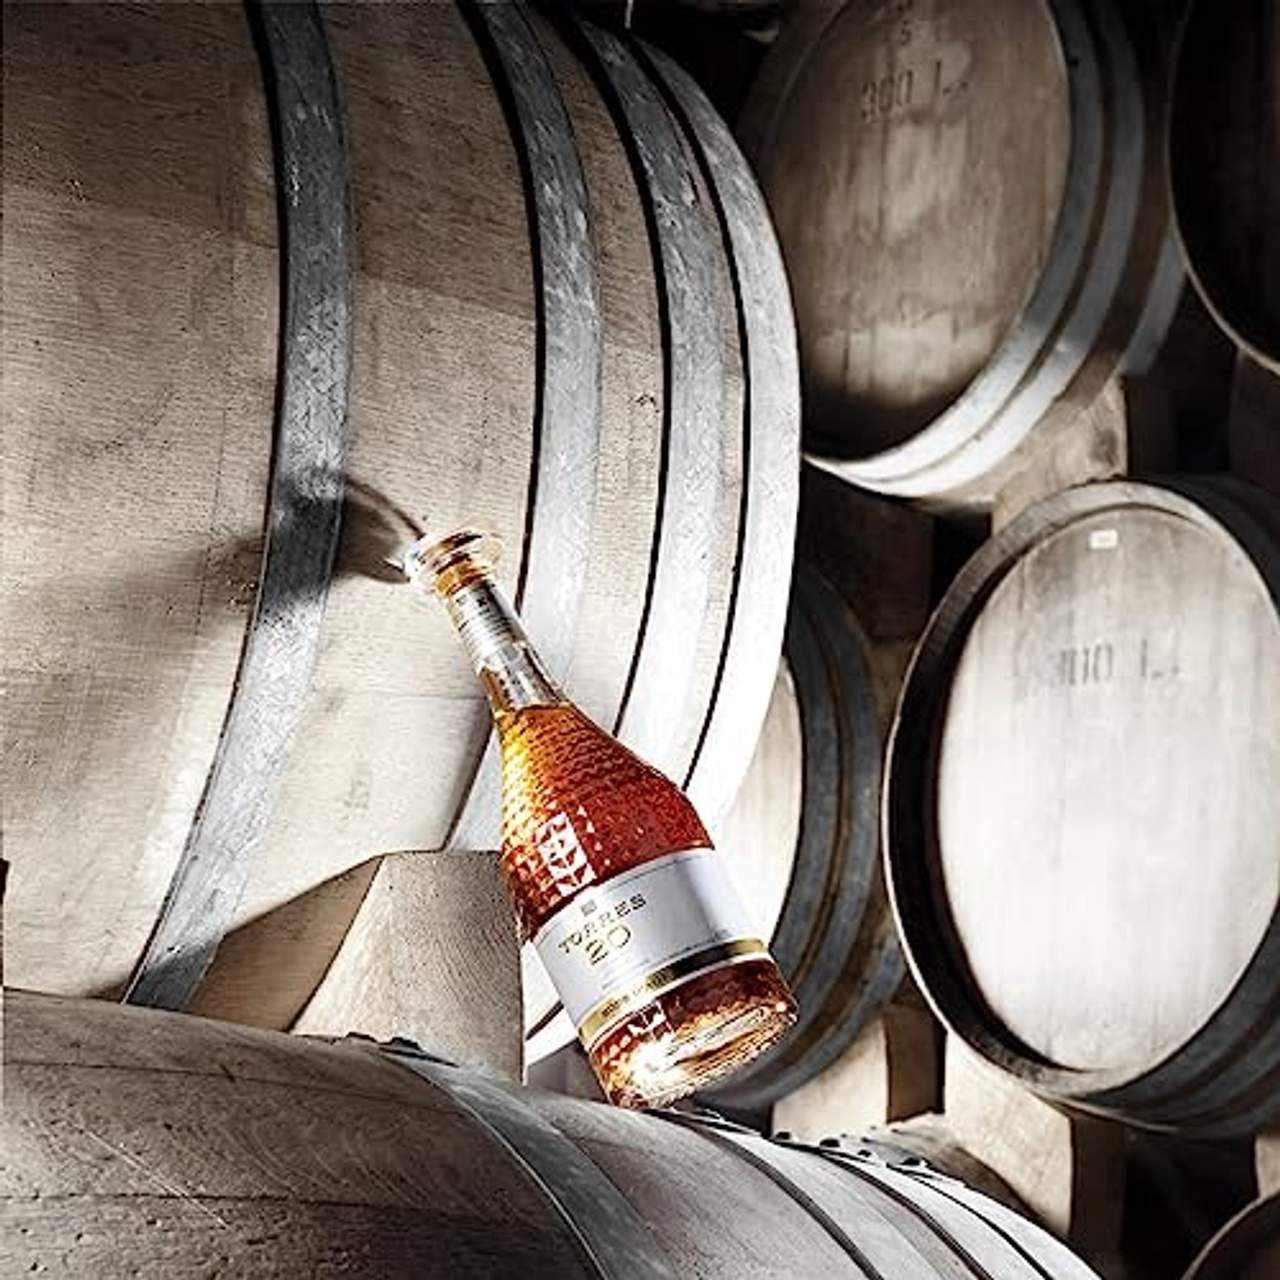 Torres Brandy 20 Superior Brandy Hors d'Age